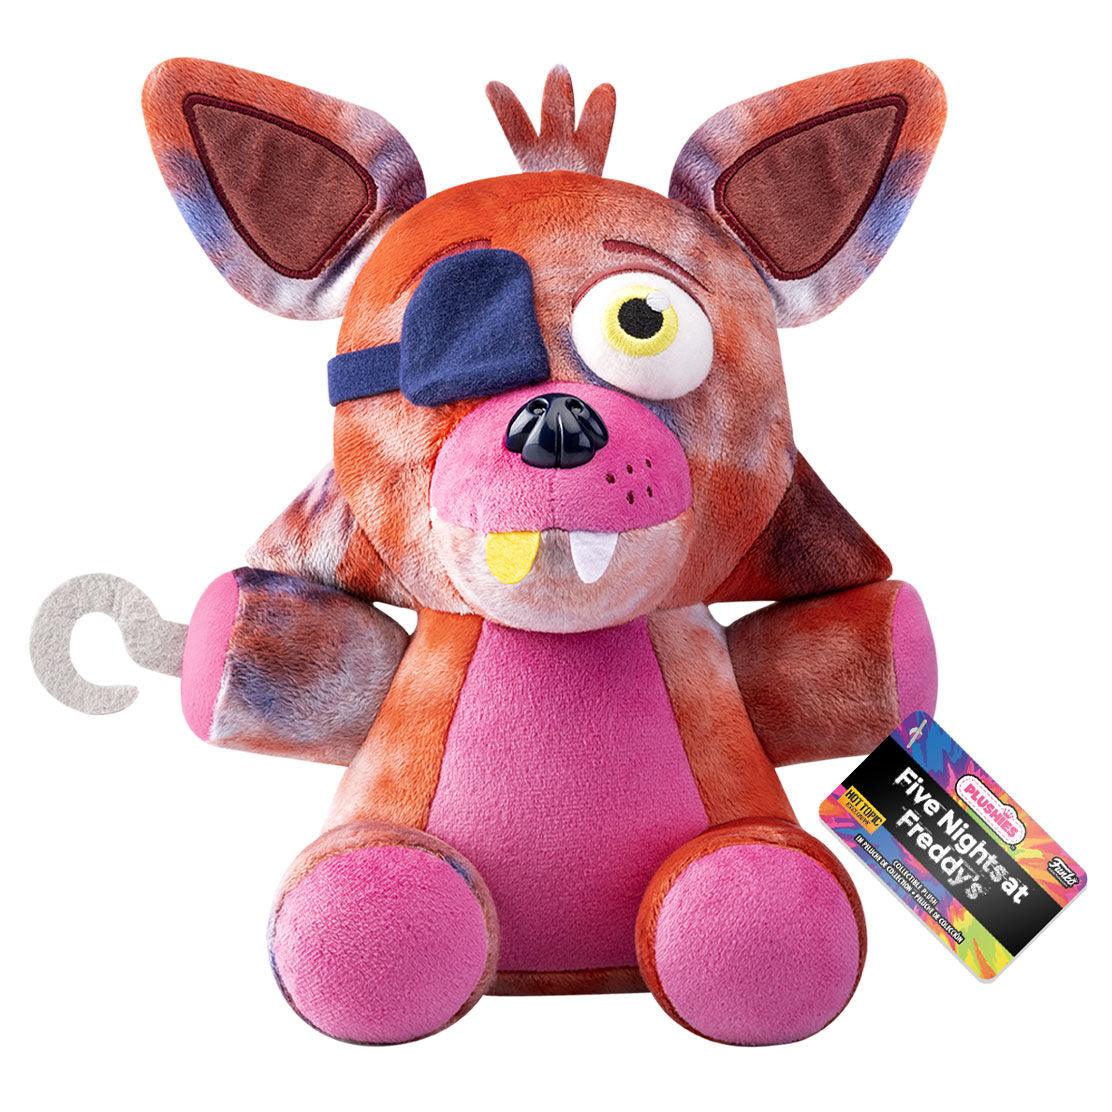 Funko Plush Jumbo: Five Nights at Freddy's Tie-Dye - Foxy Plush Toy